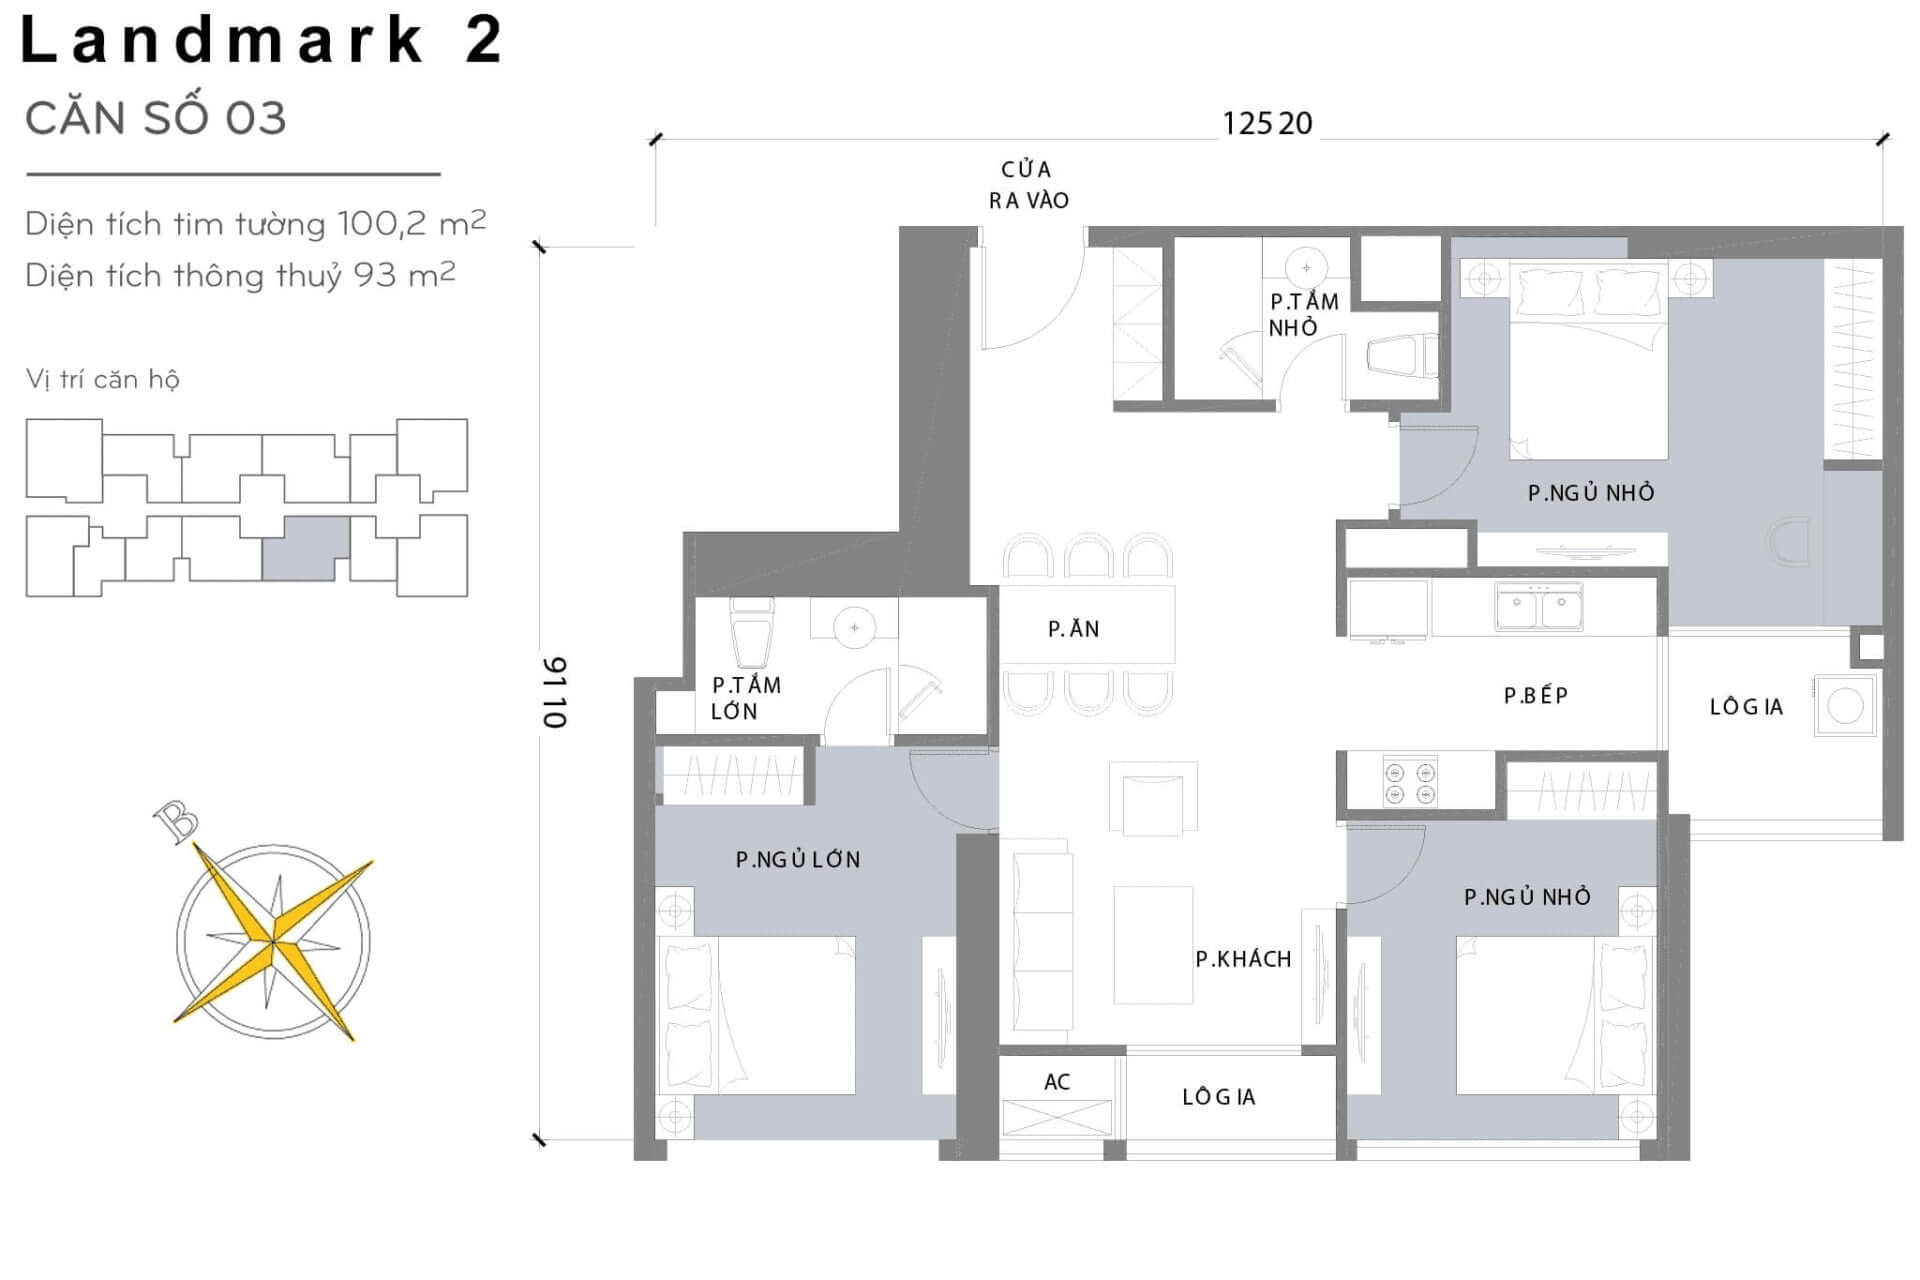 layout căn hộ số 2 Landmark 2 L2-03